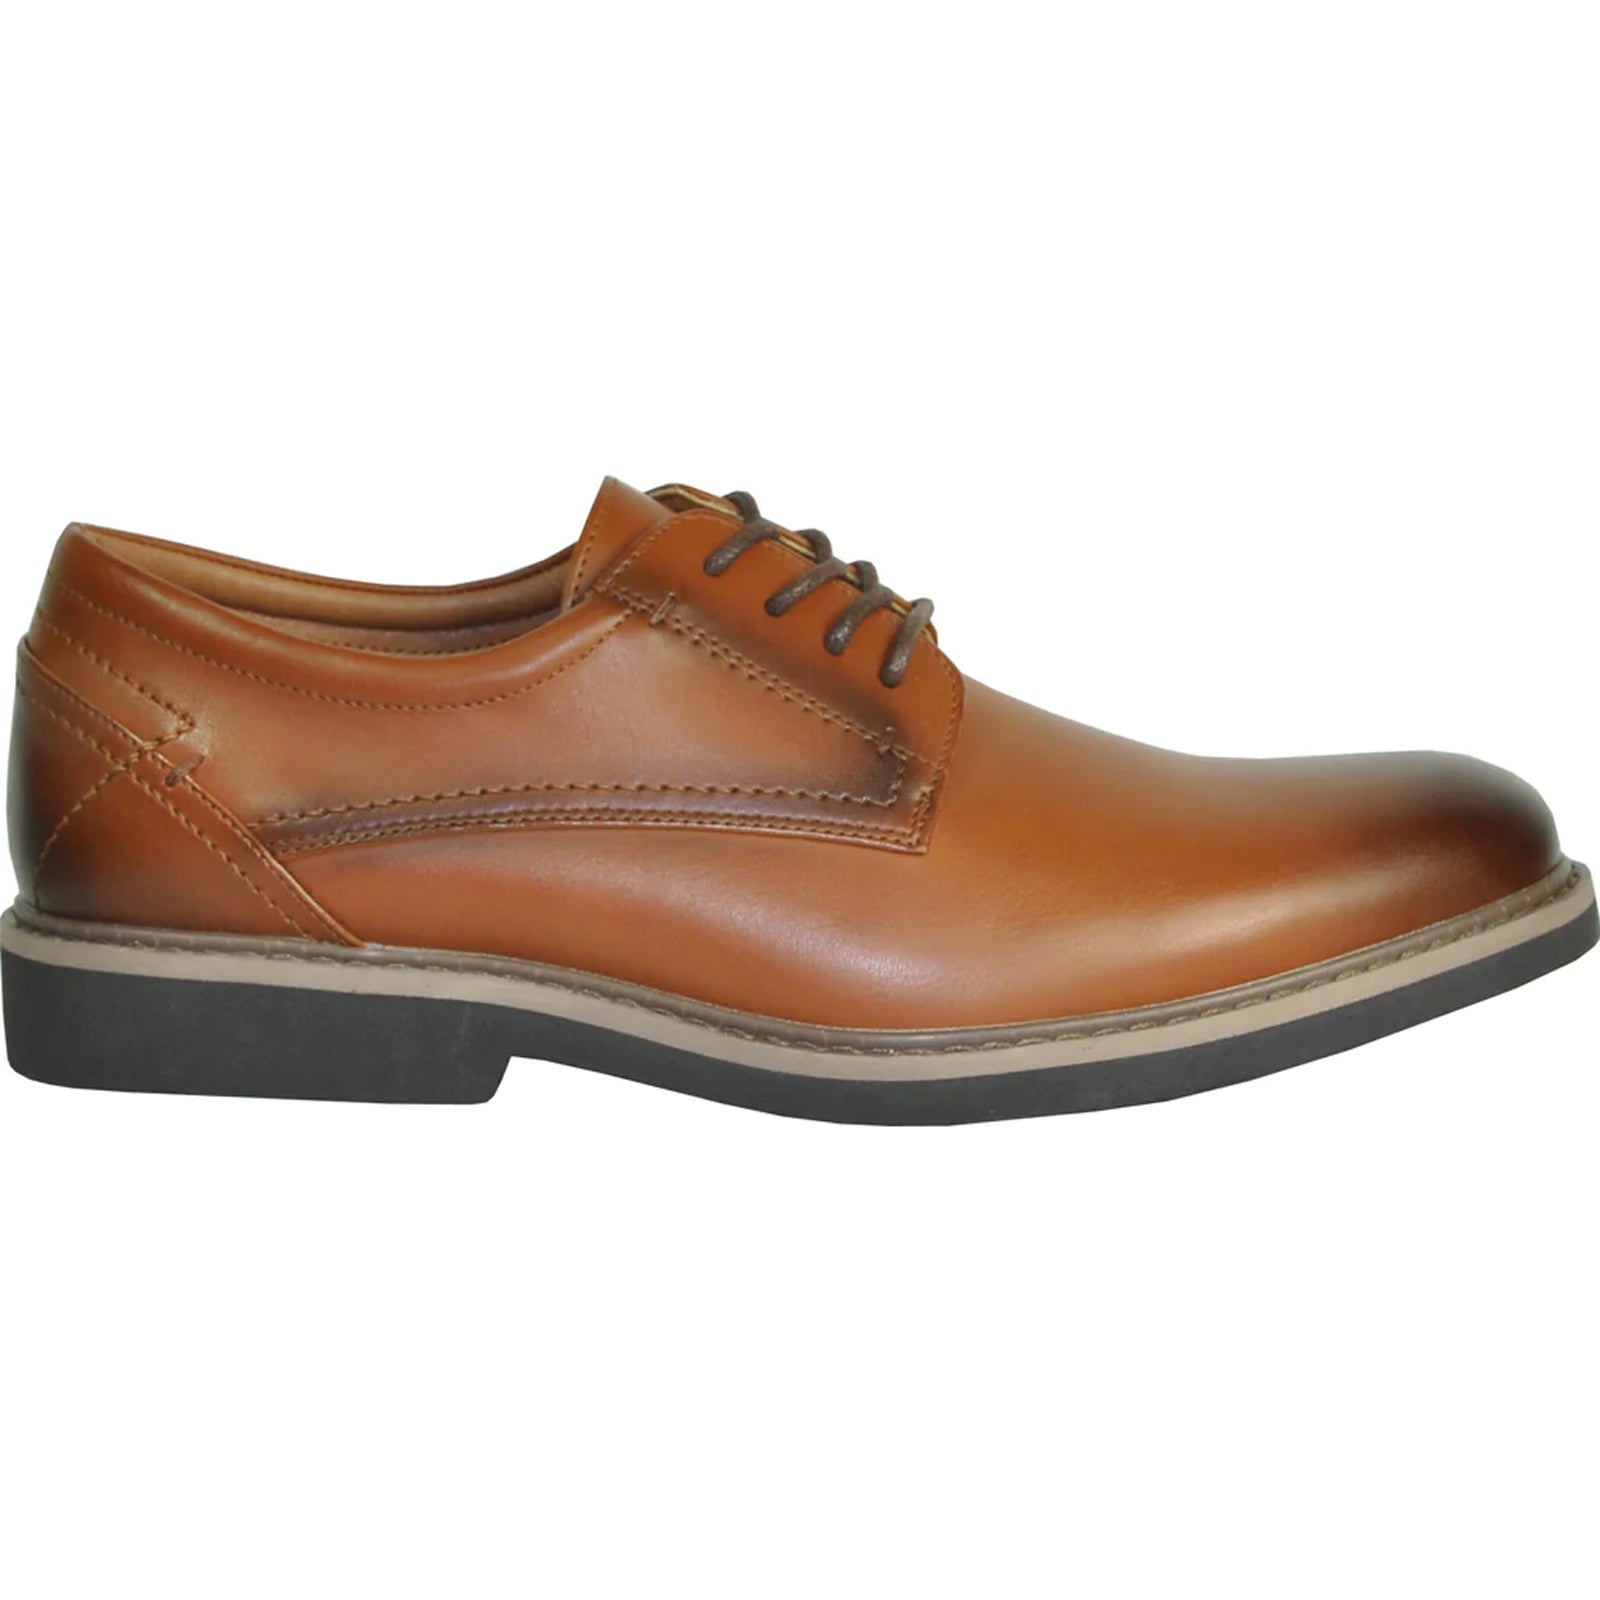 "Antique Cognac Brown Oxford Dress Shoe for Men - Relaxed Fit"